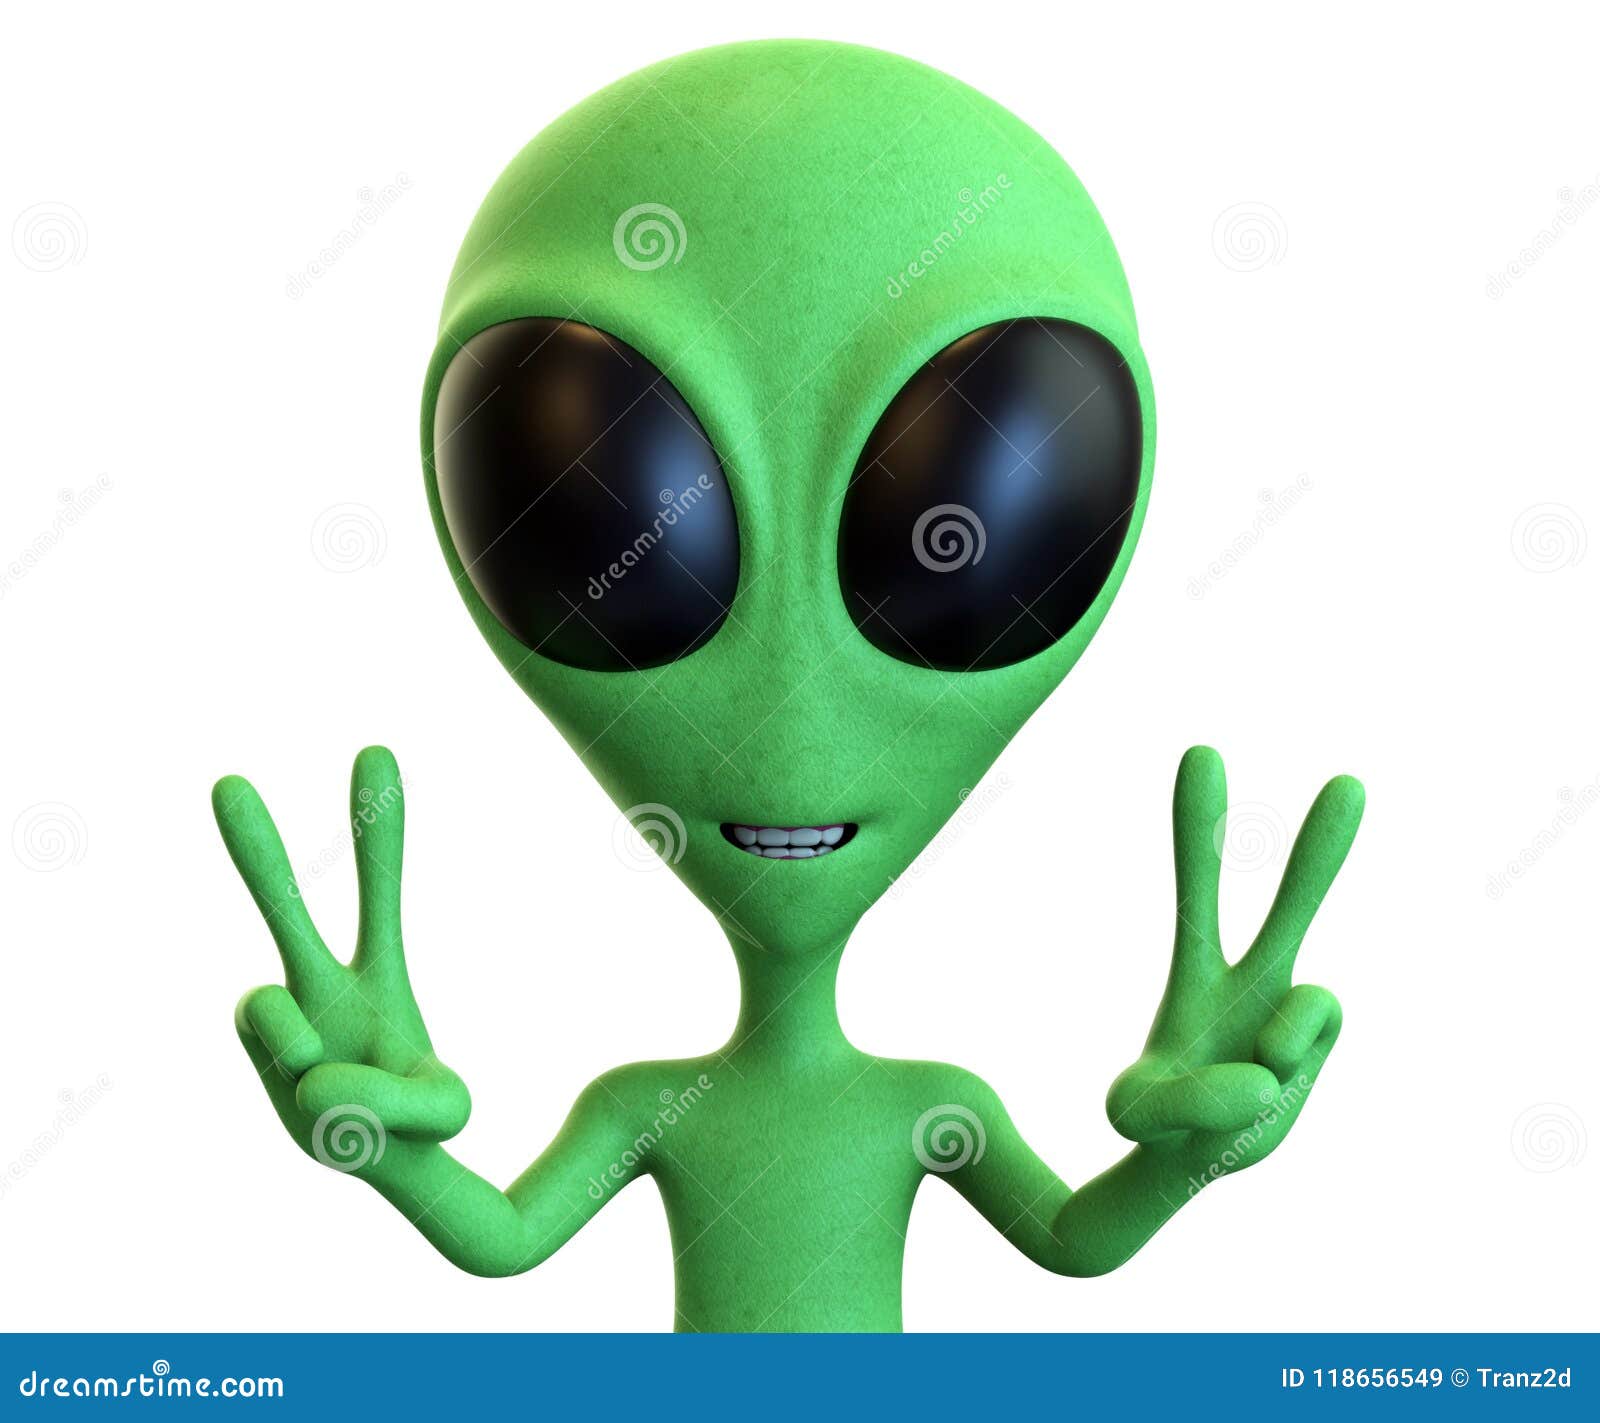 green cartoon alien showing dual peace signs